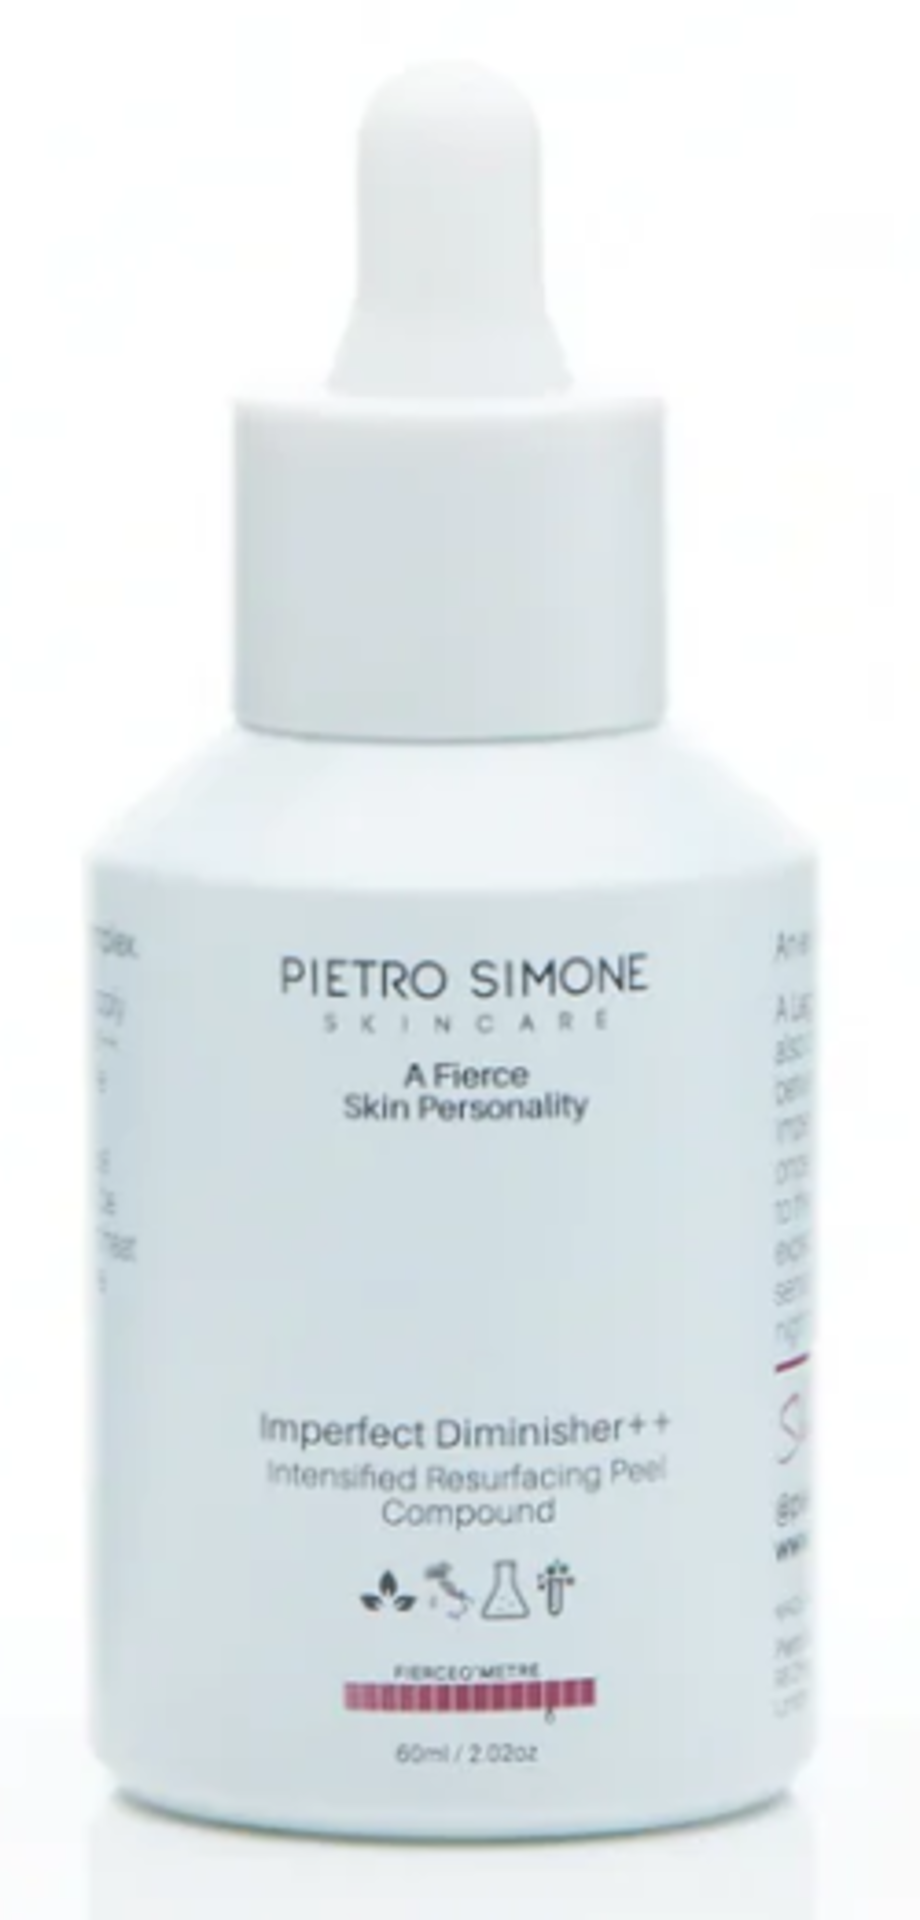 3 x Pietro Simone Skincare: IMPERFECTION DIMINISHER ++ 60ML. RRP £55.00. An exfoliating, texture